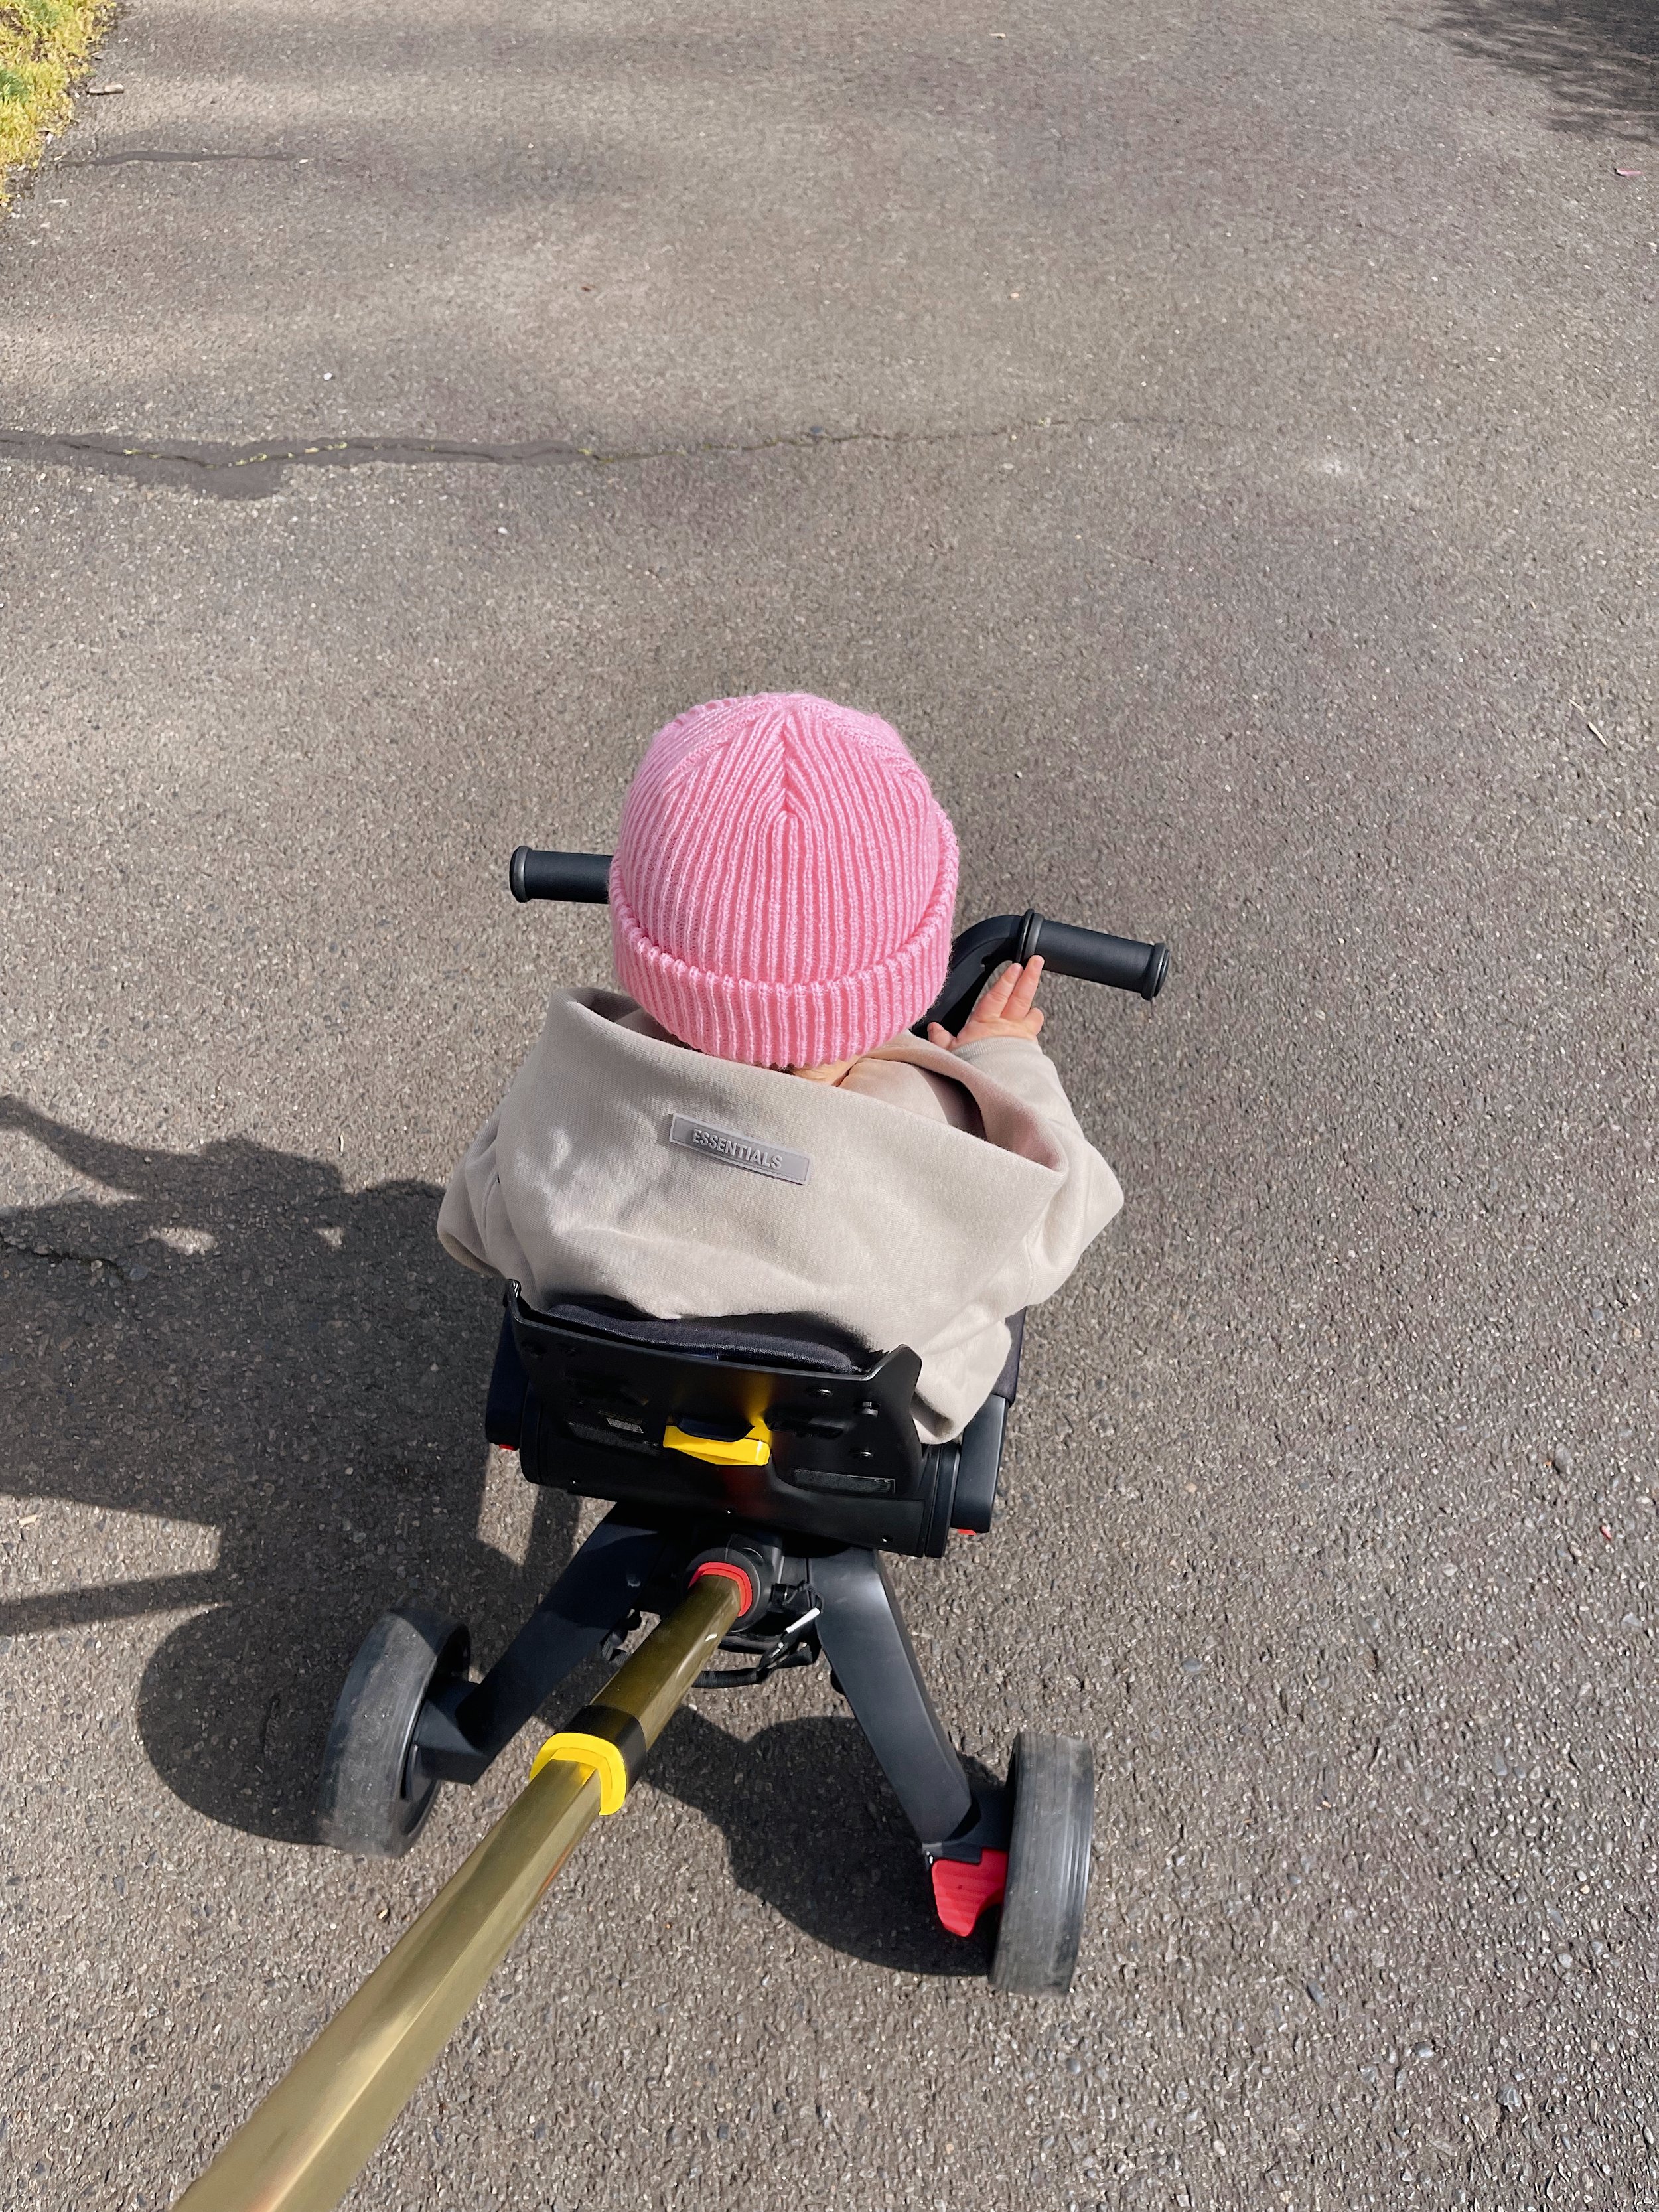 Toddler Trike Bike Review - Baby and Mama - bresheppard.com.JPG